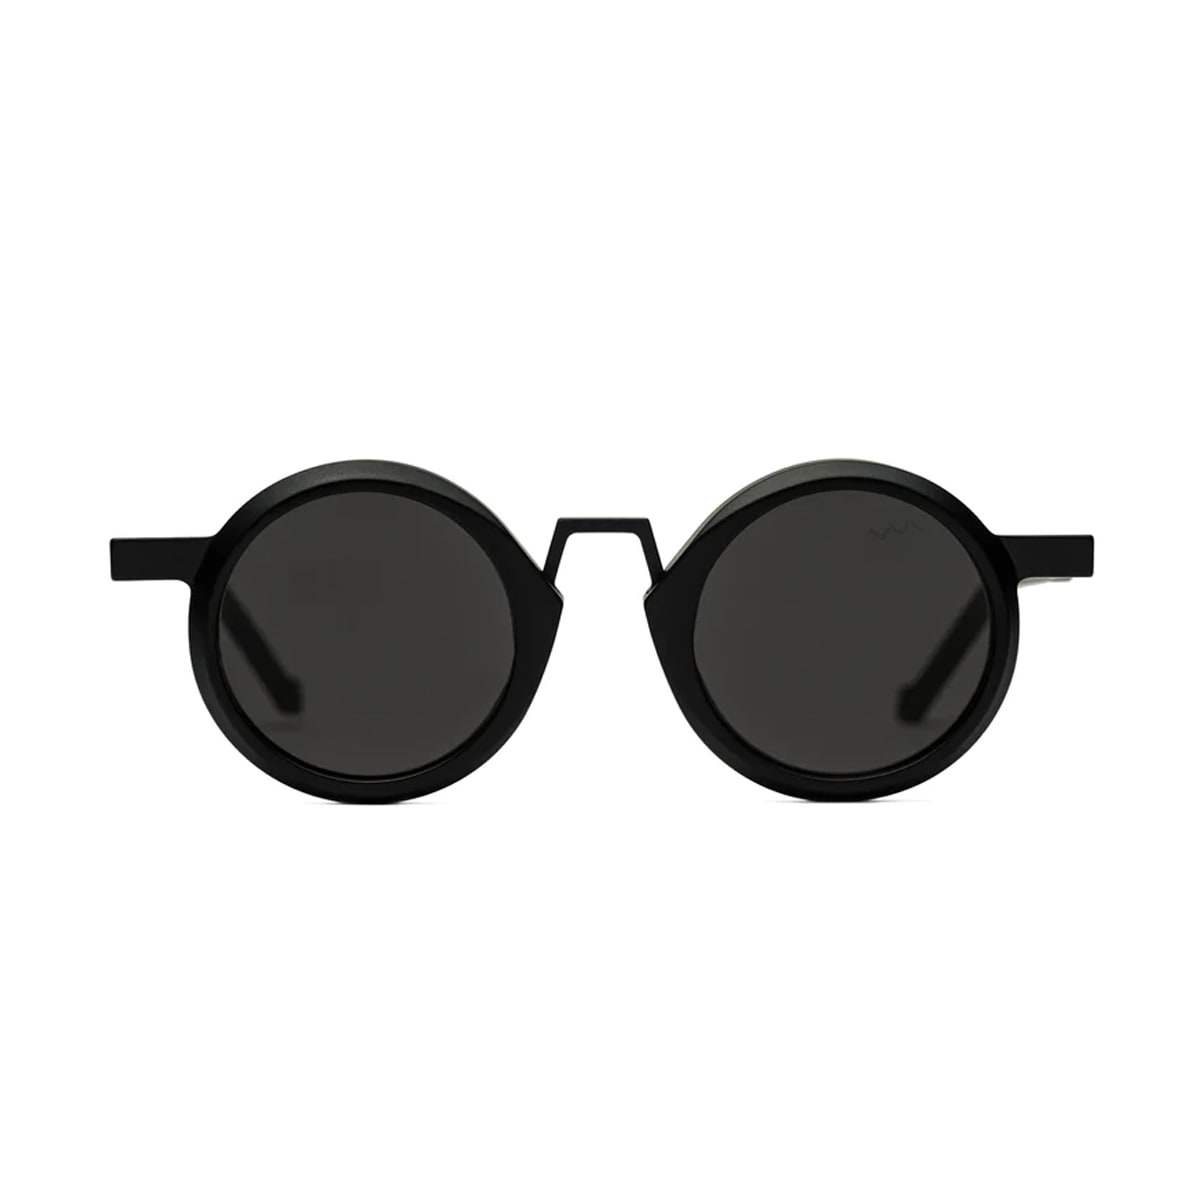 Wl0044 Black Sunglasses